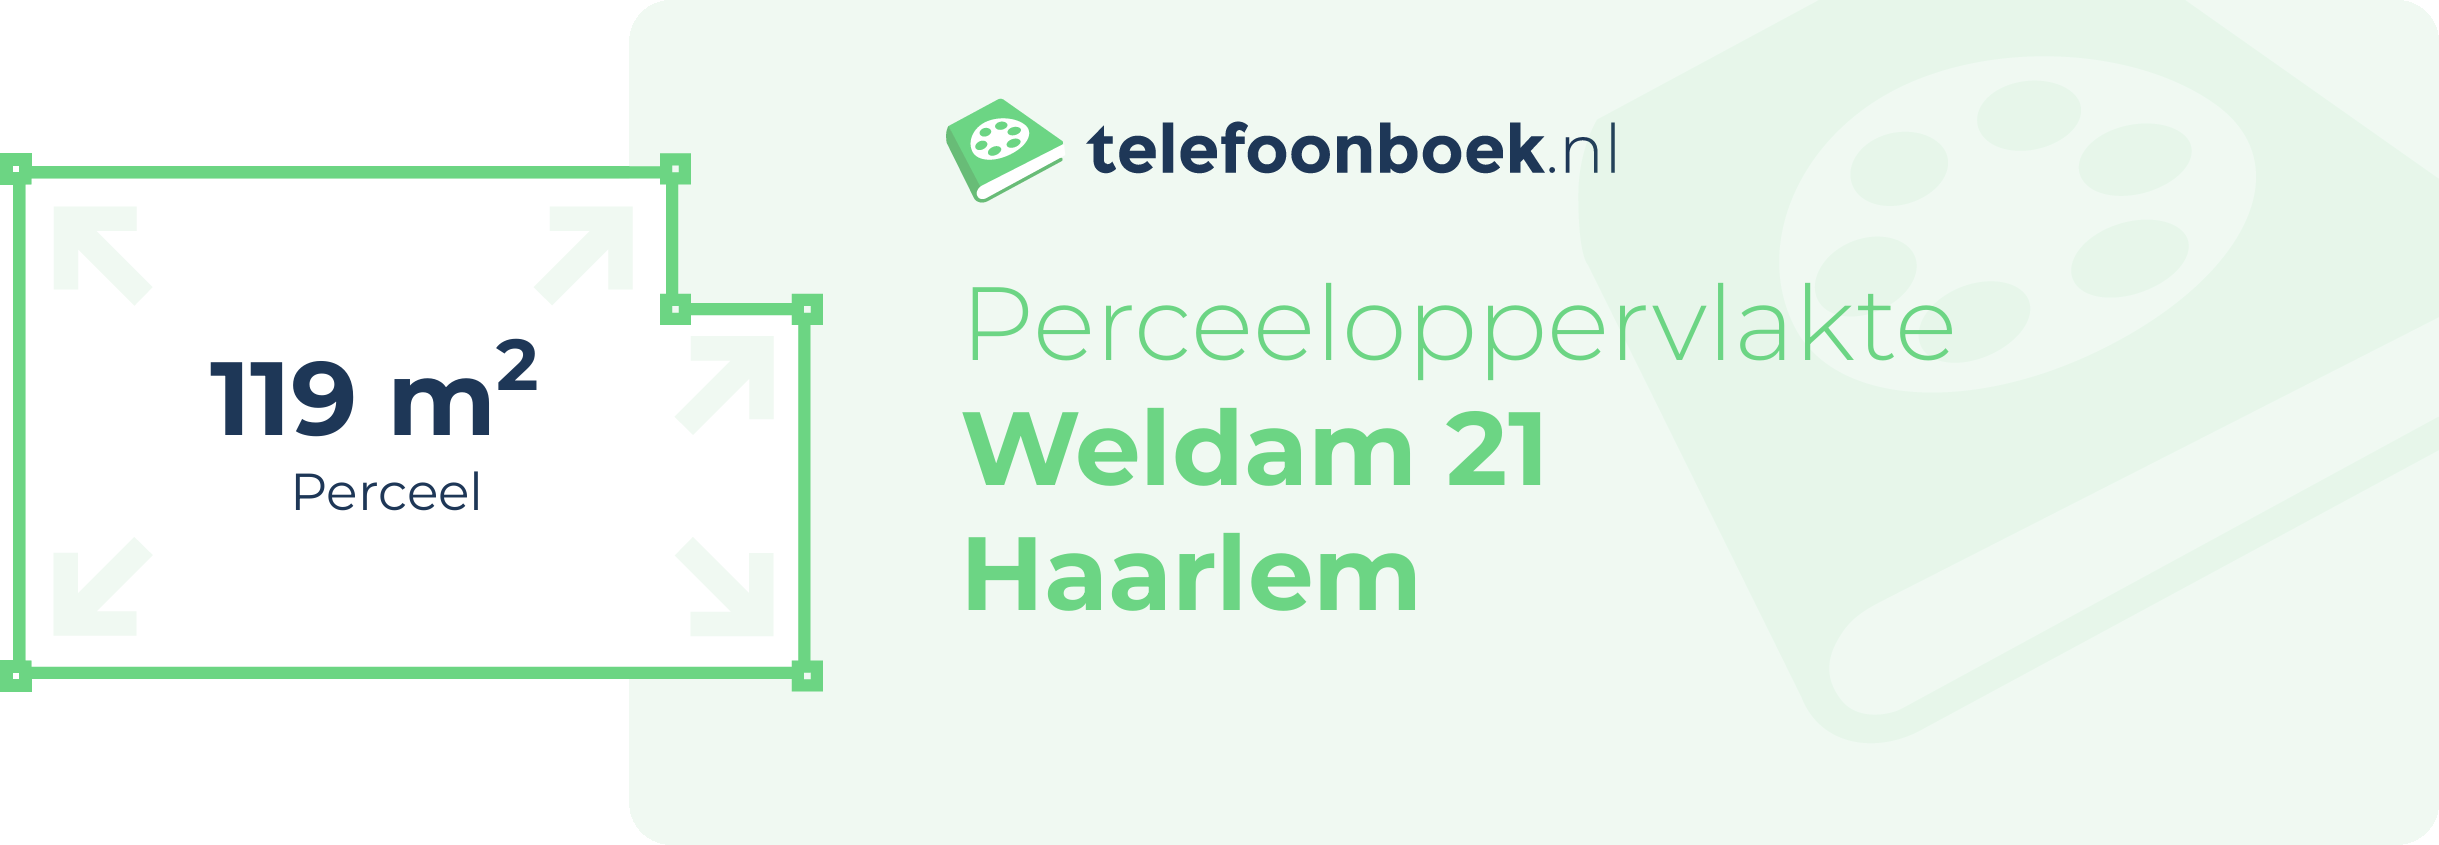 Perceeloppervlakte Weldam 21 Haarlem